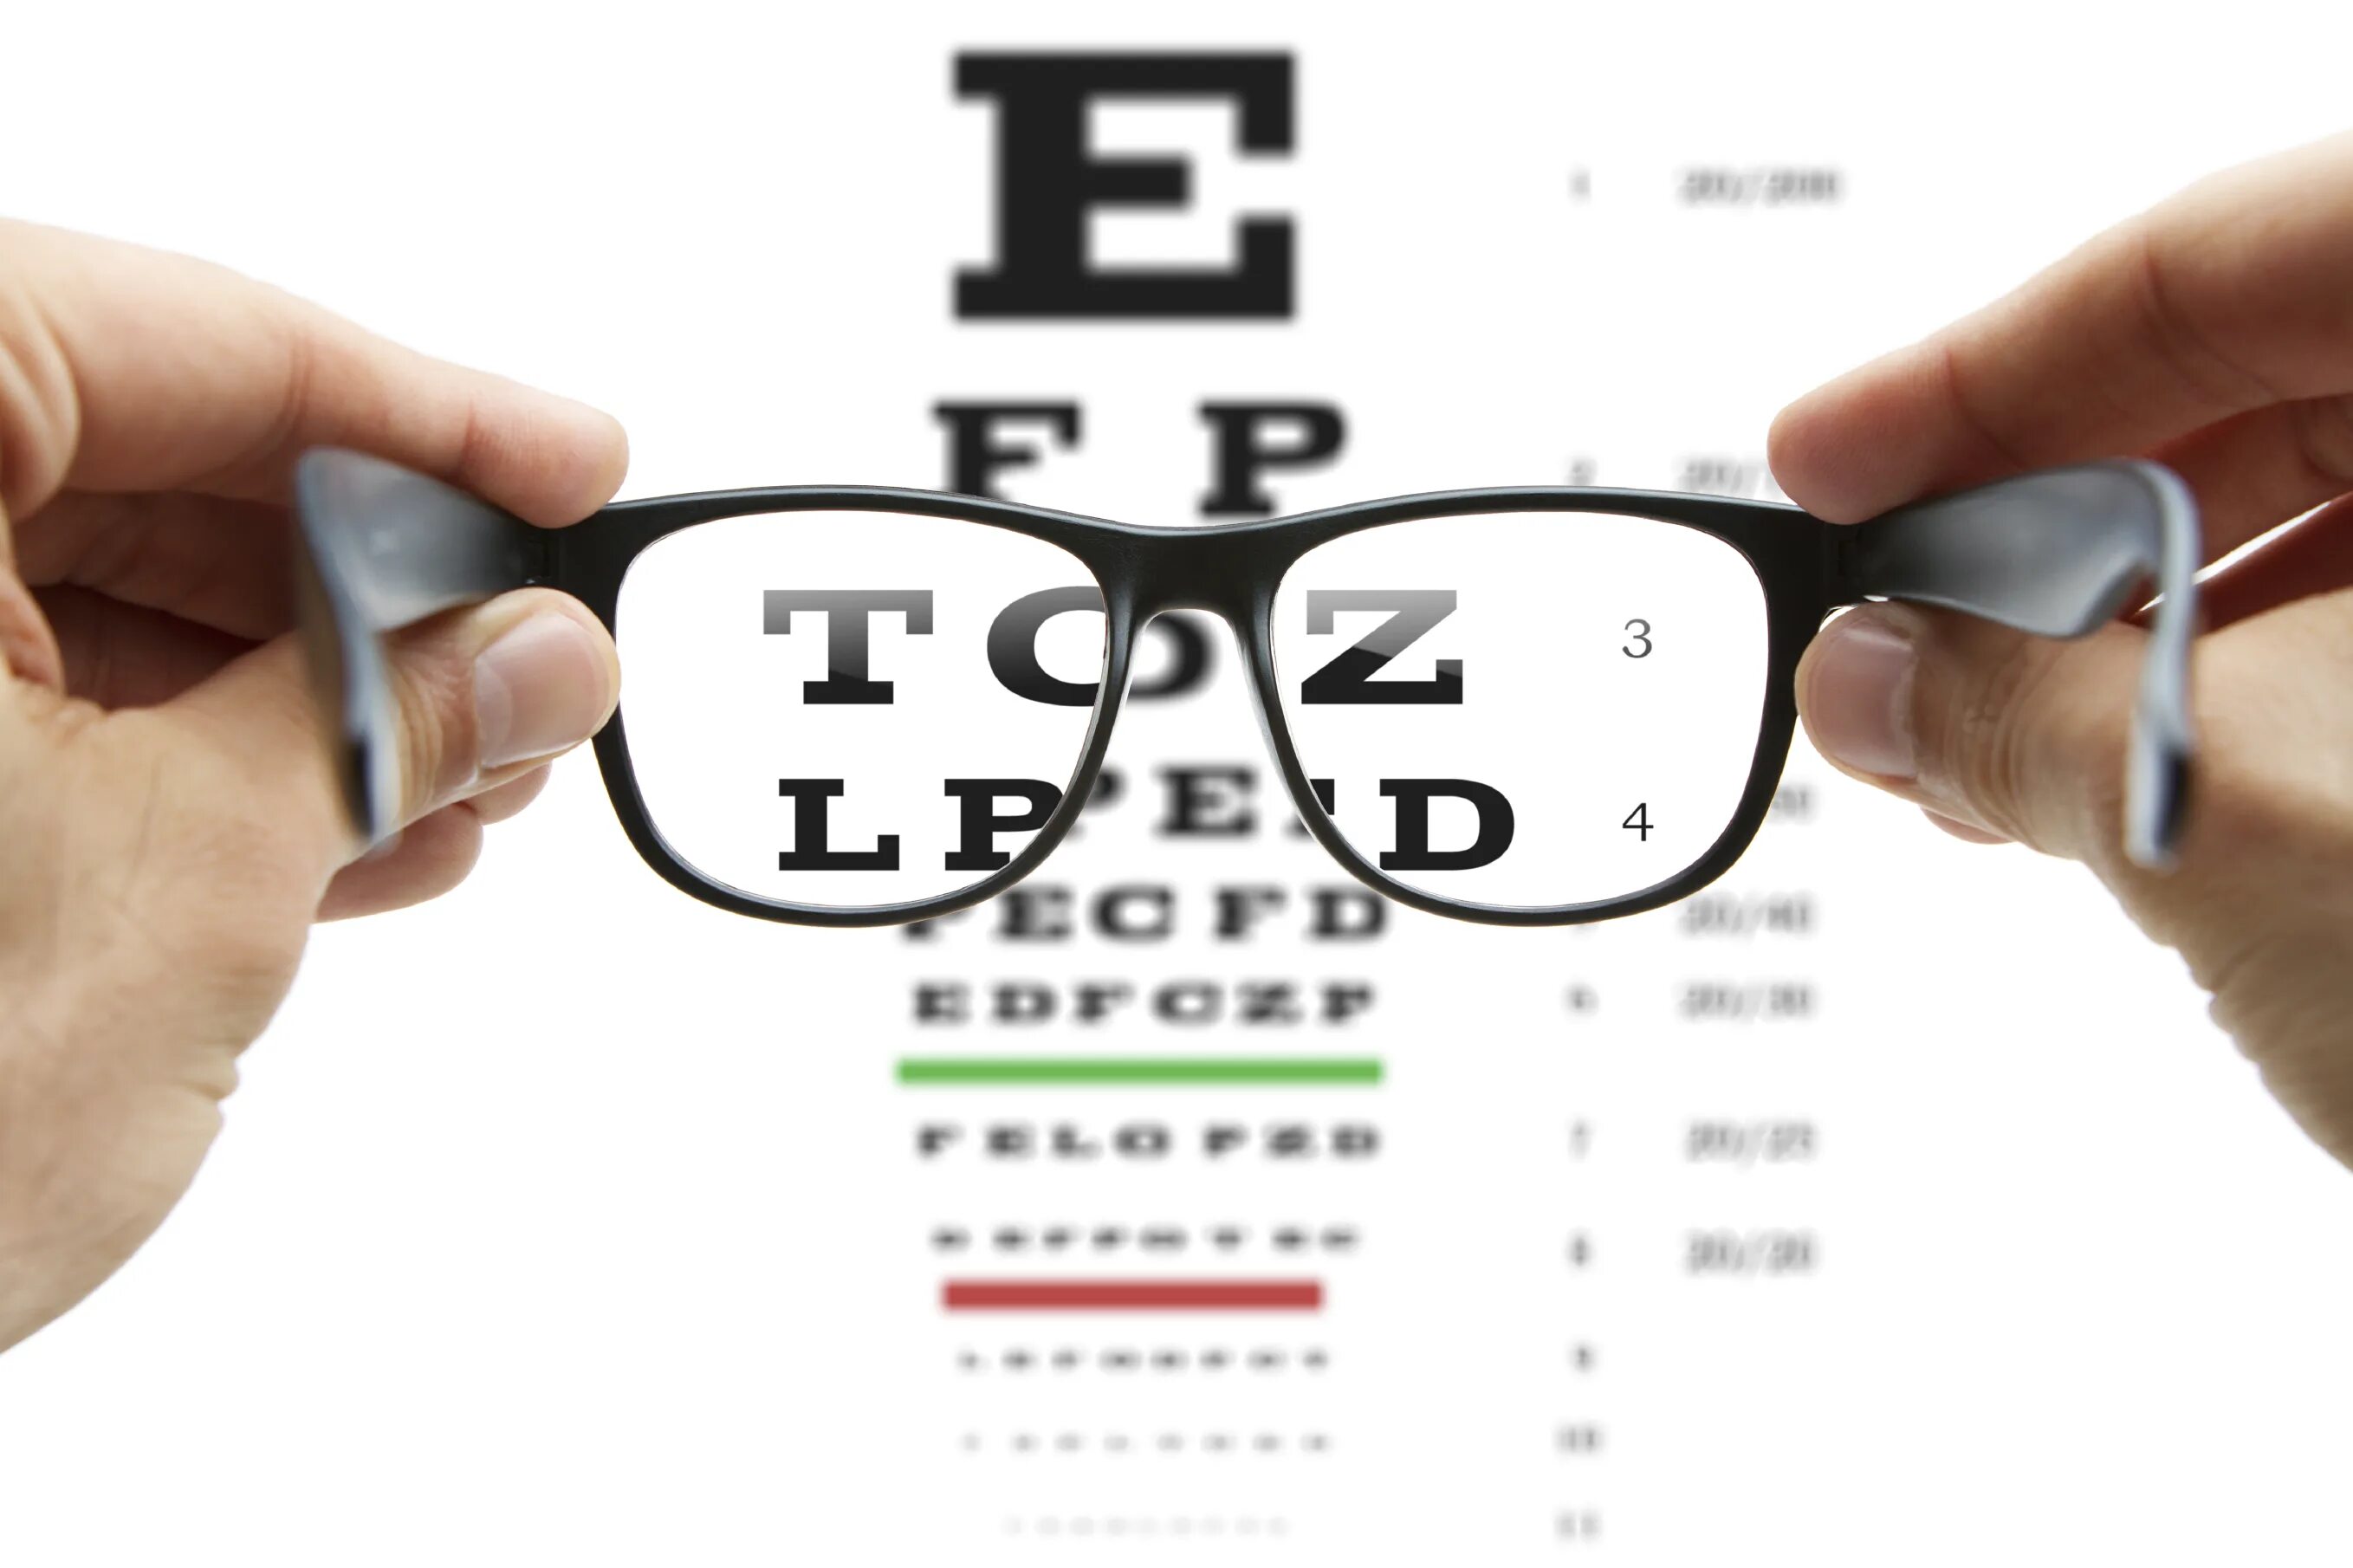 Зрение 0 10. Оптика очки для проверки зрения. Картинки для зрения. Визитка оптики. Аппарат для проверки зрения.